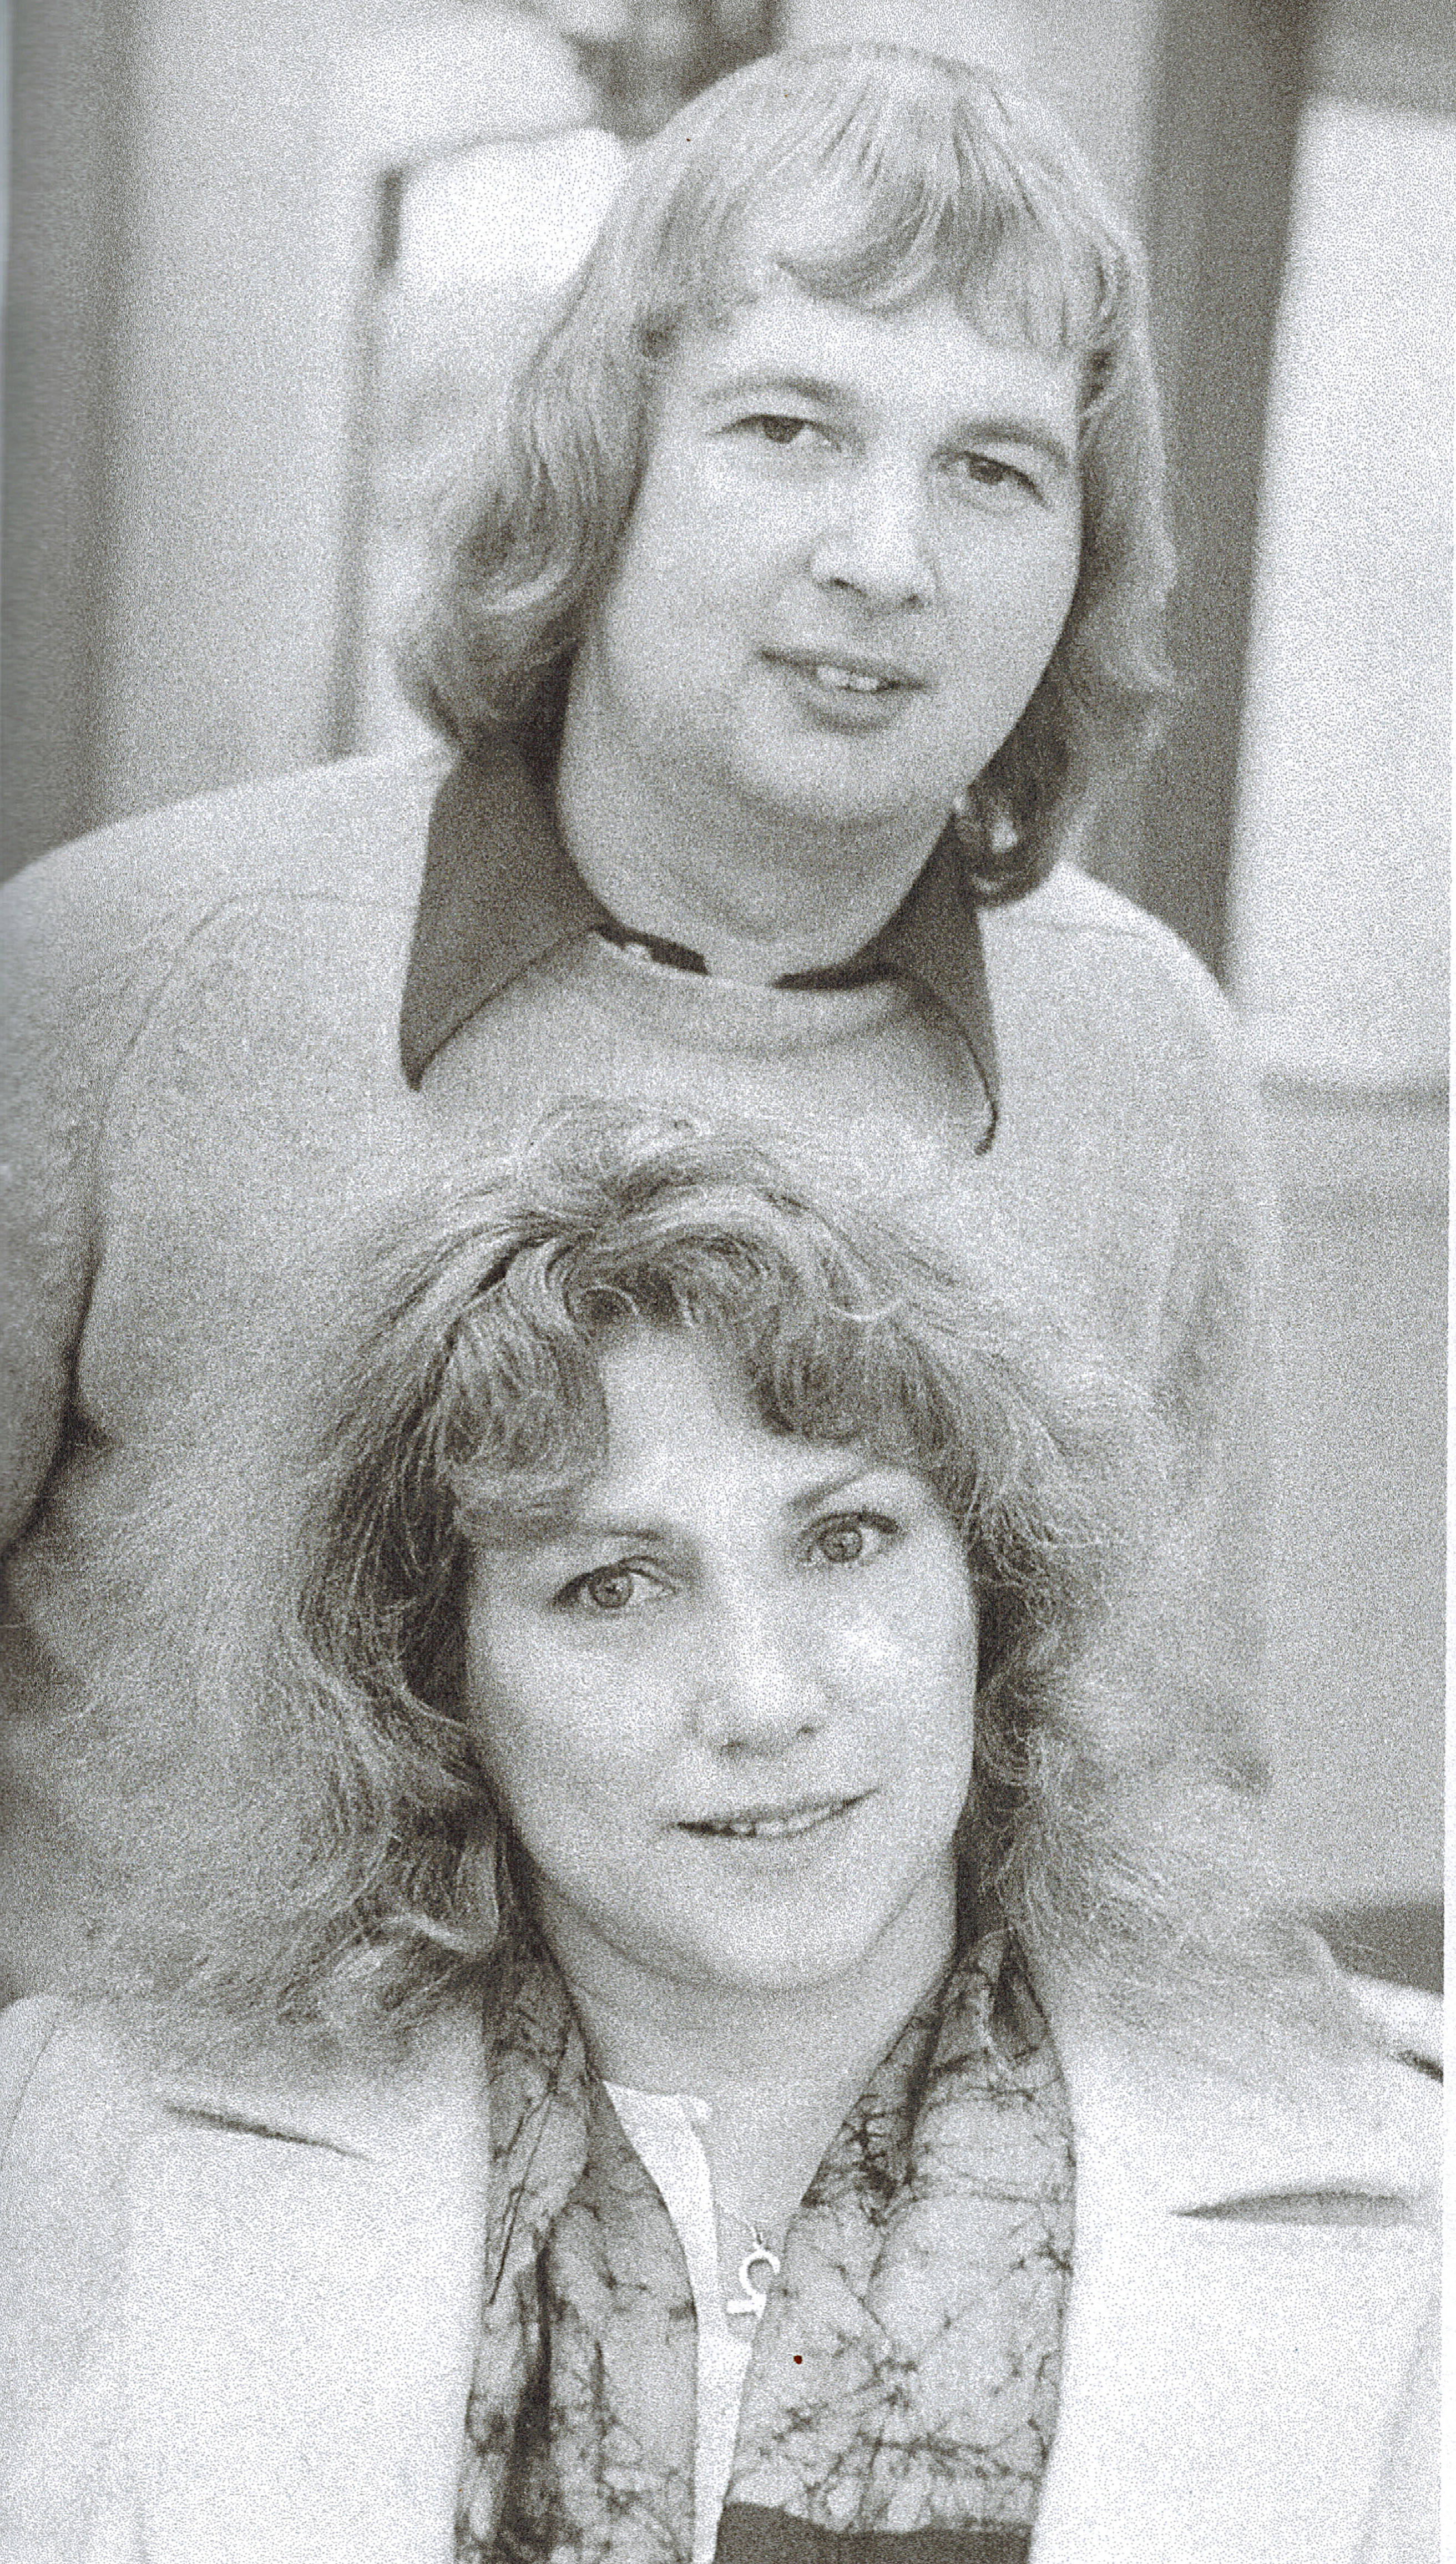 Keith and Conny 1979 - Photo Courtesy of the Calgary Albertan